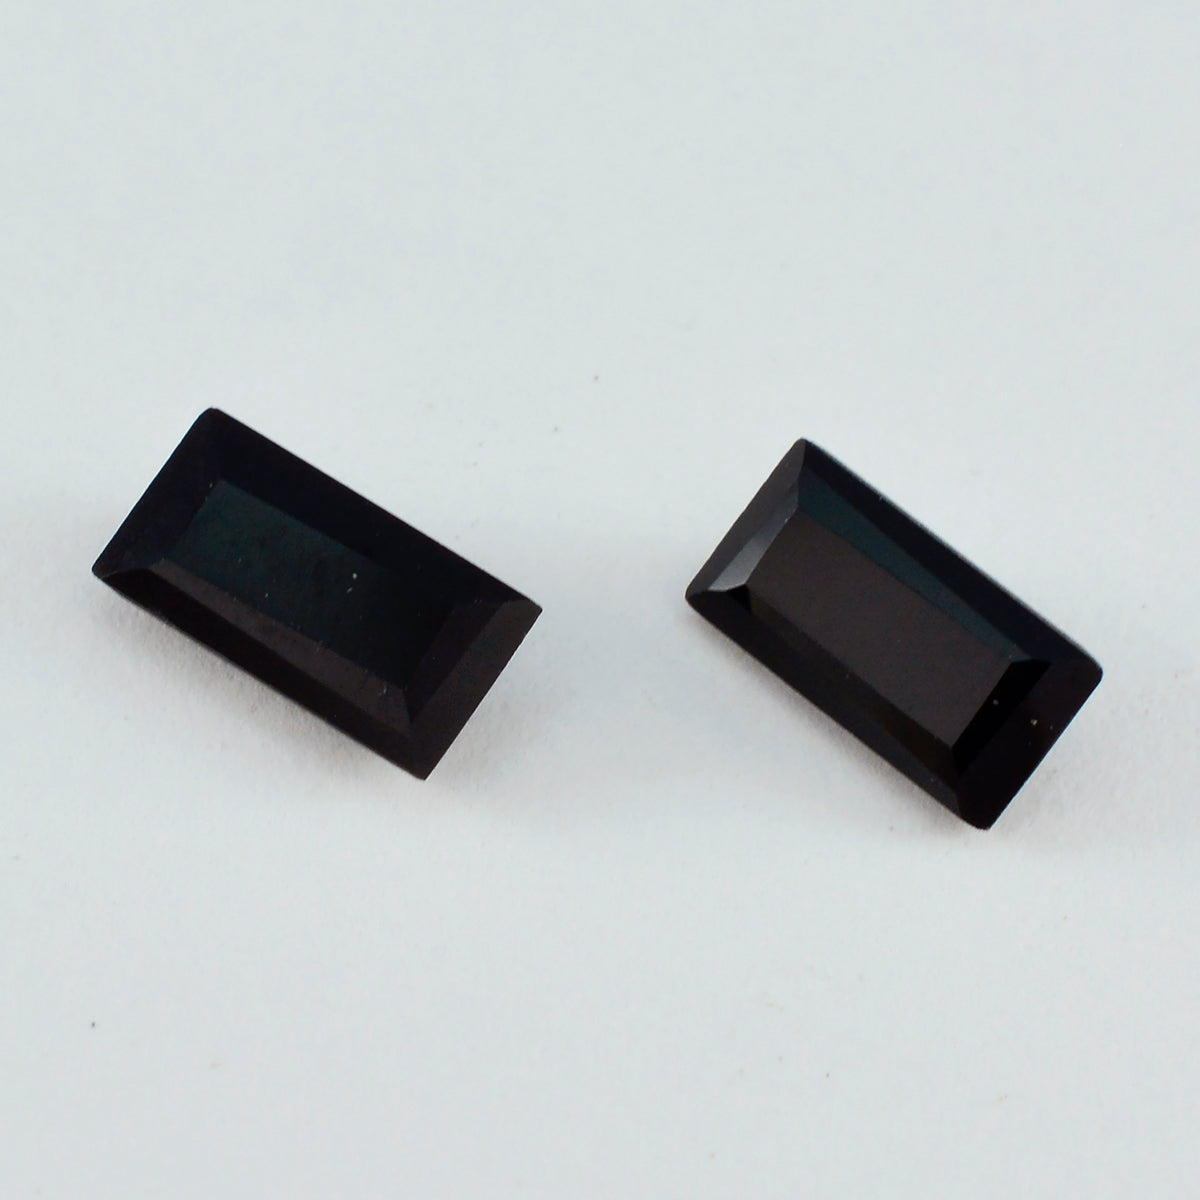 Riyogems 1PC Genuine Black Onyx Faceted 9x18 mm Baguette Shape AAA Quality Loose Gemstone